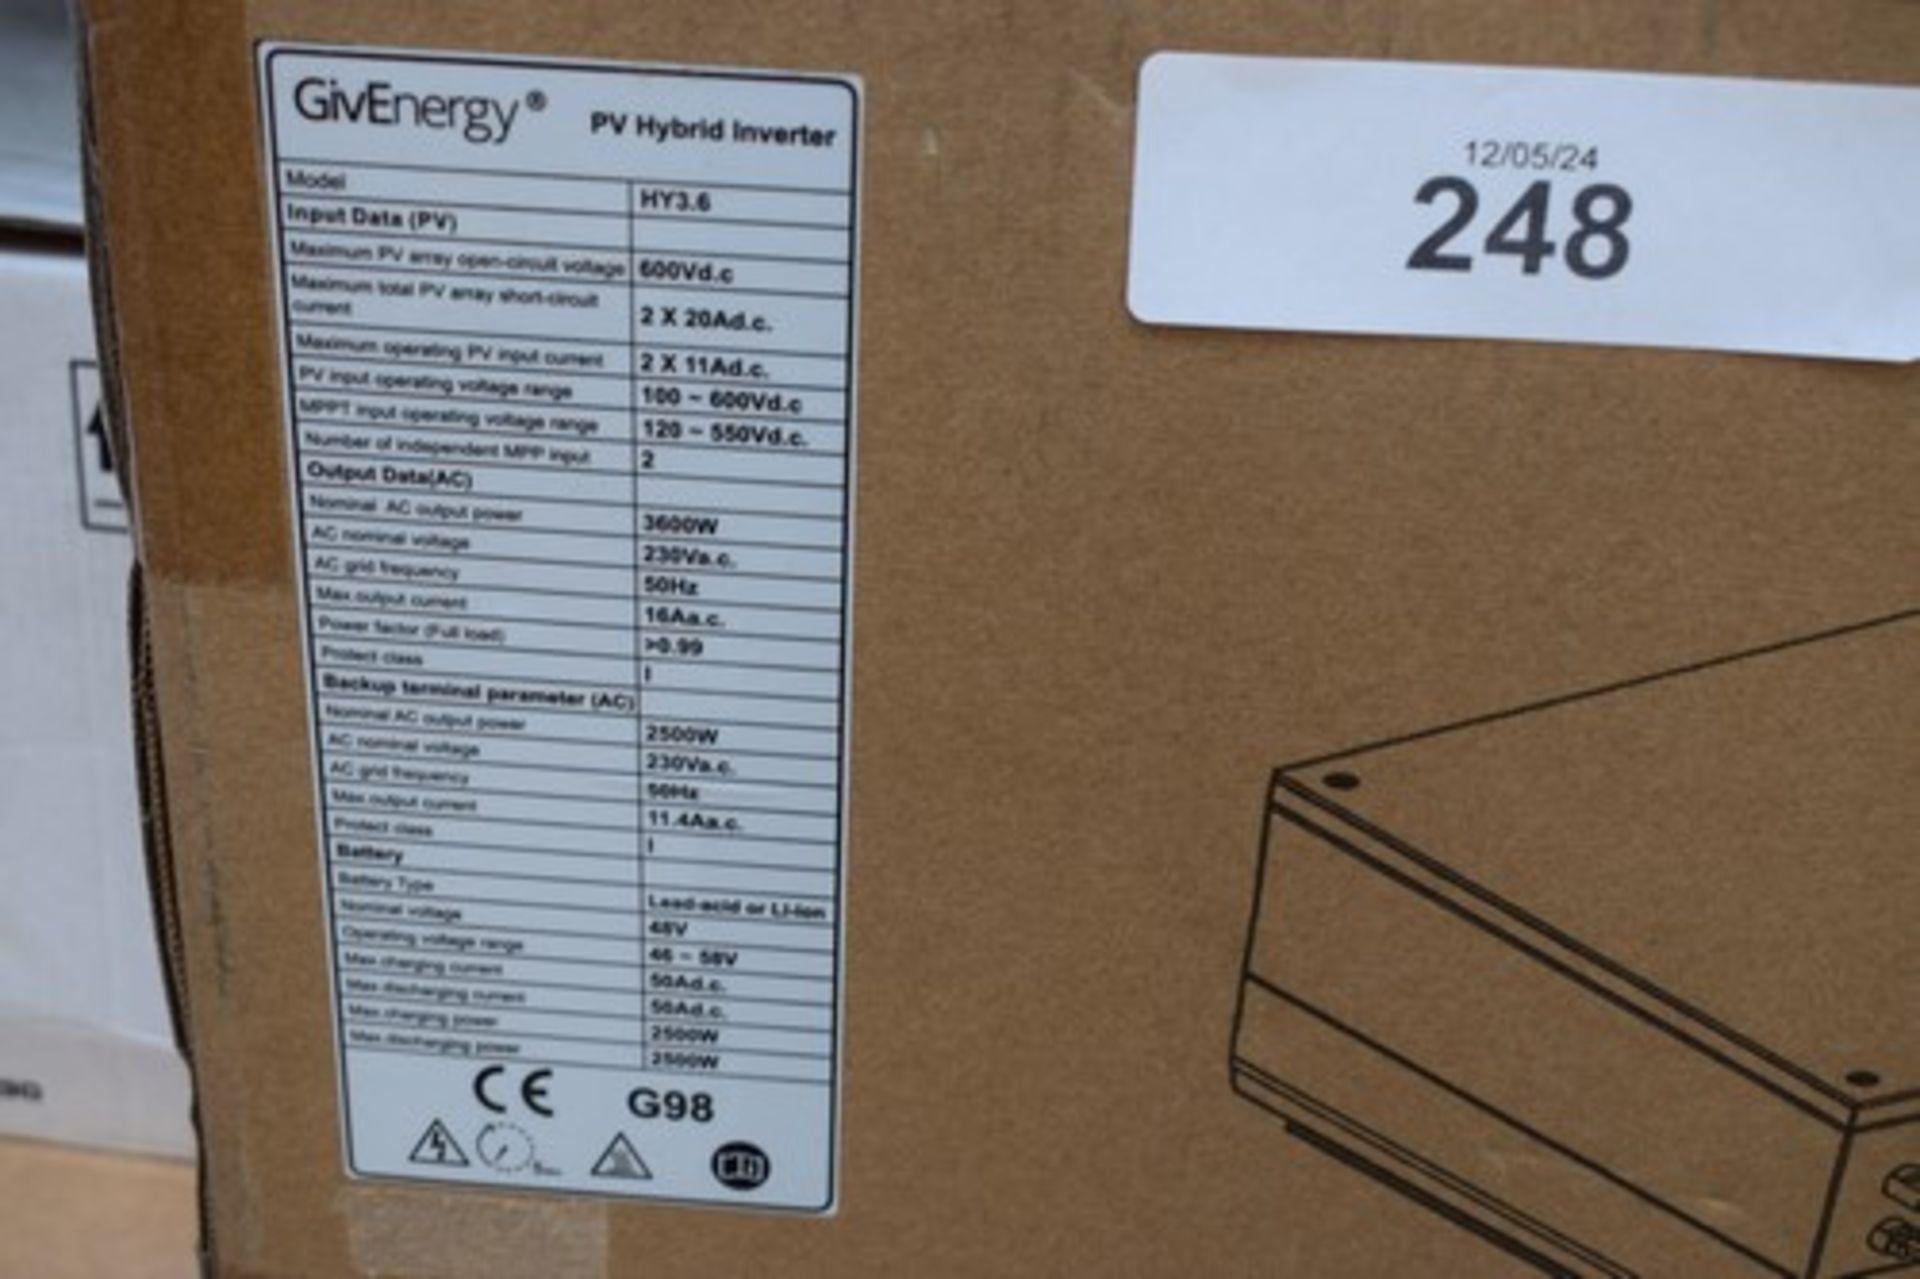 1 x Givenergy 3600W PV hybrid inverter, Model HY3.6, 600VDC - New in box (SR) - Image 2 of 2